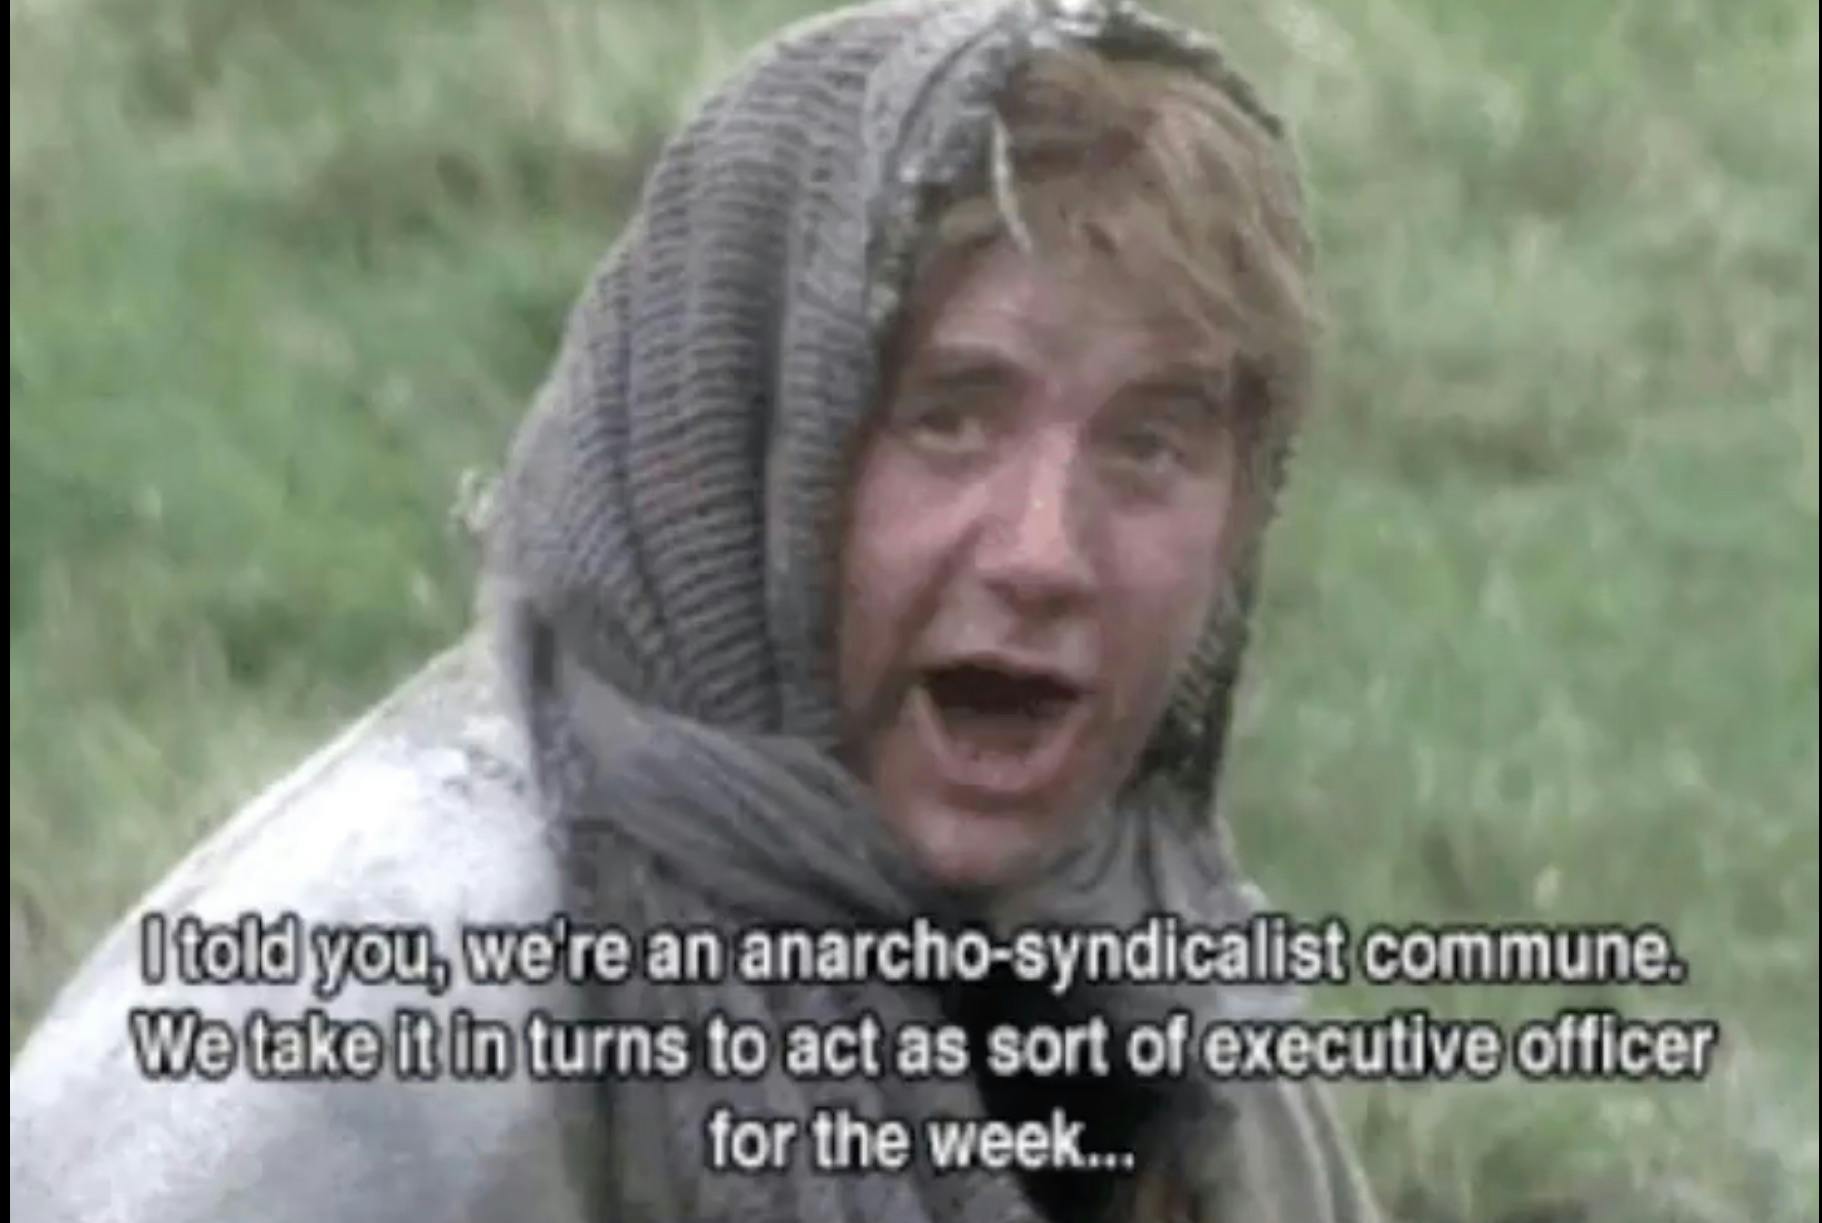 My favorite Monty Python scene on anarcho-syndicalism: https://www.youtube.com/watch?v=R7qT-C-0ajI